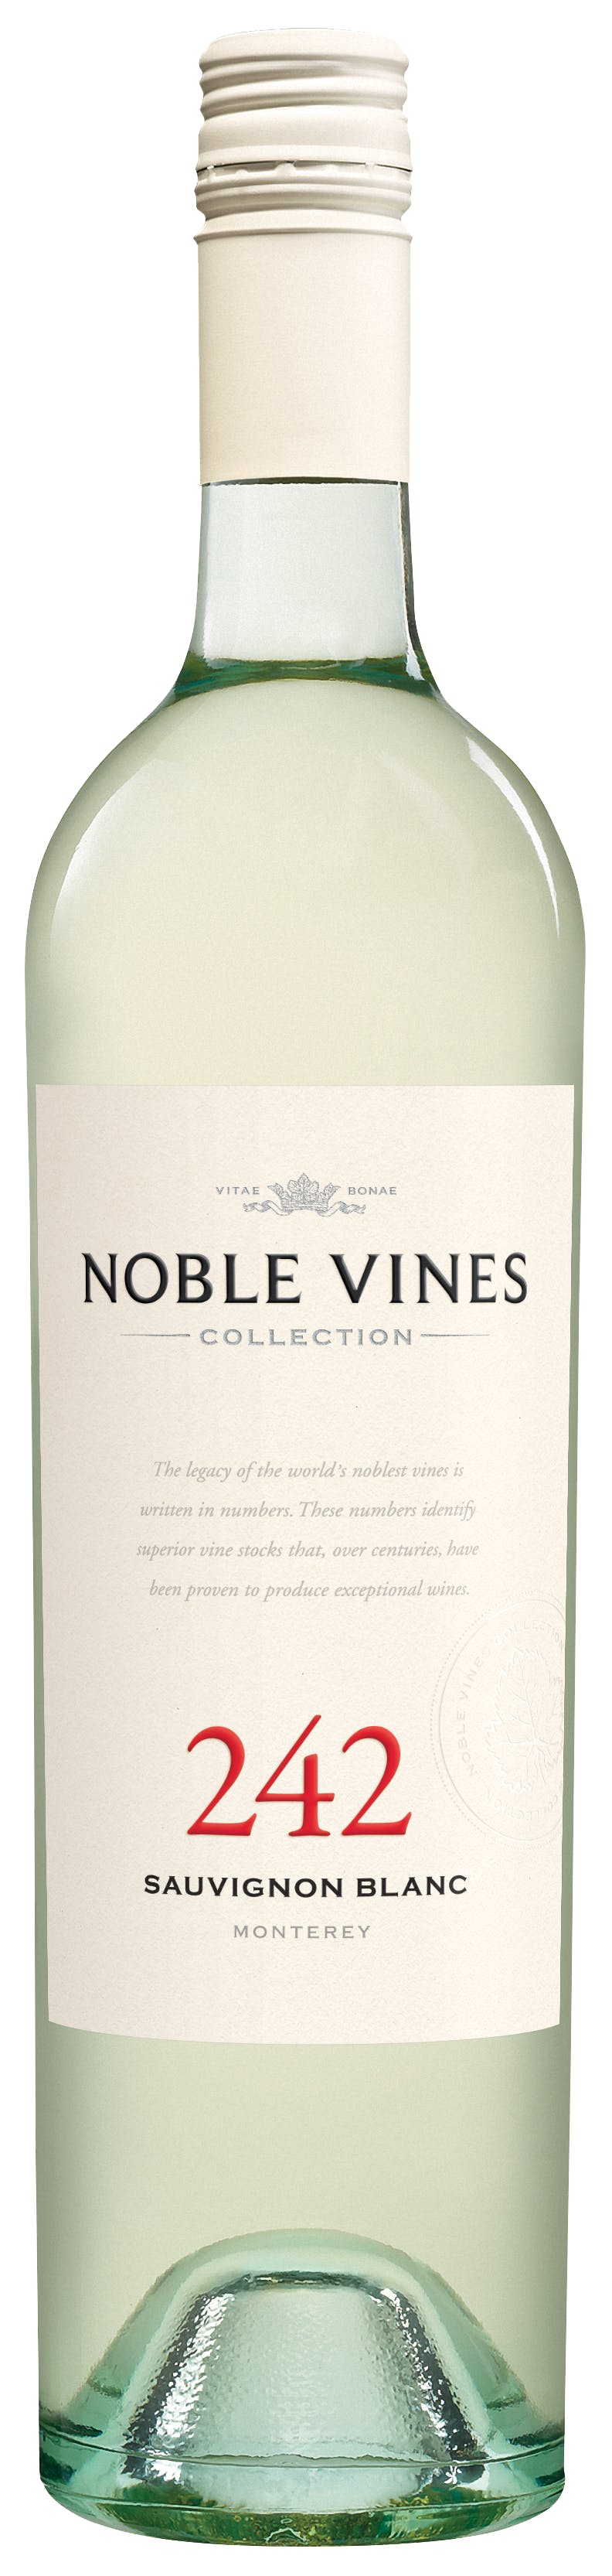 images/wine/WHITE WINE/Noble Vines 242 Sauvignon Blanc.jpg